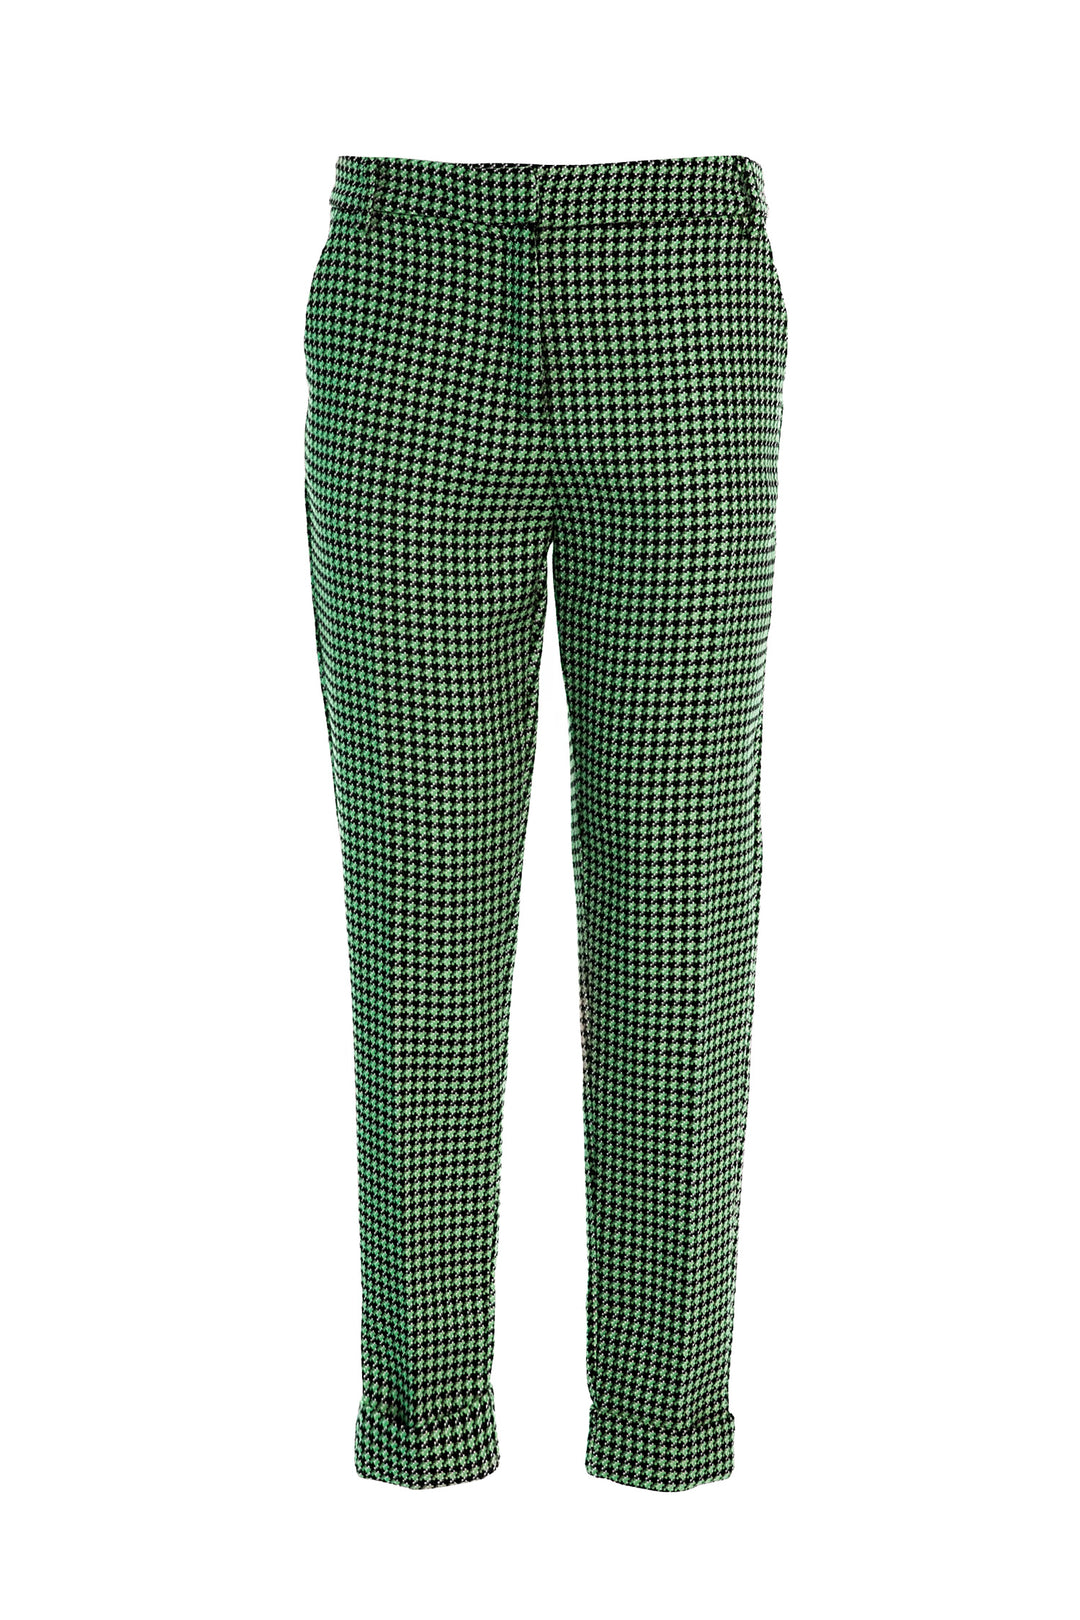 FRACOMINA Pantalone chino regular verde in fantasia pied de poule - Mancinelli 1954